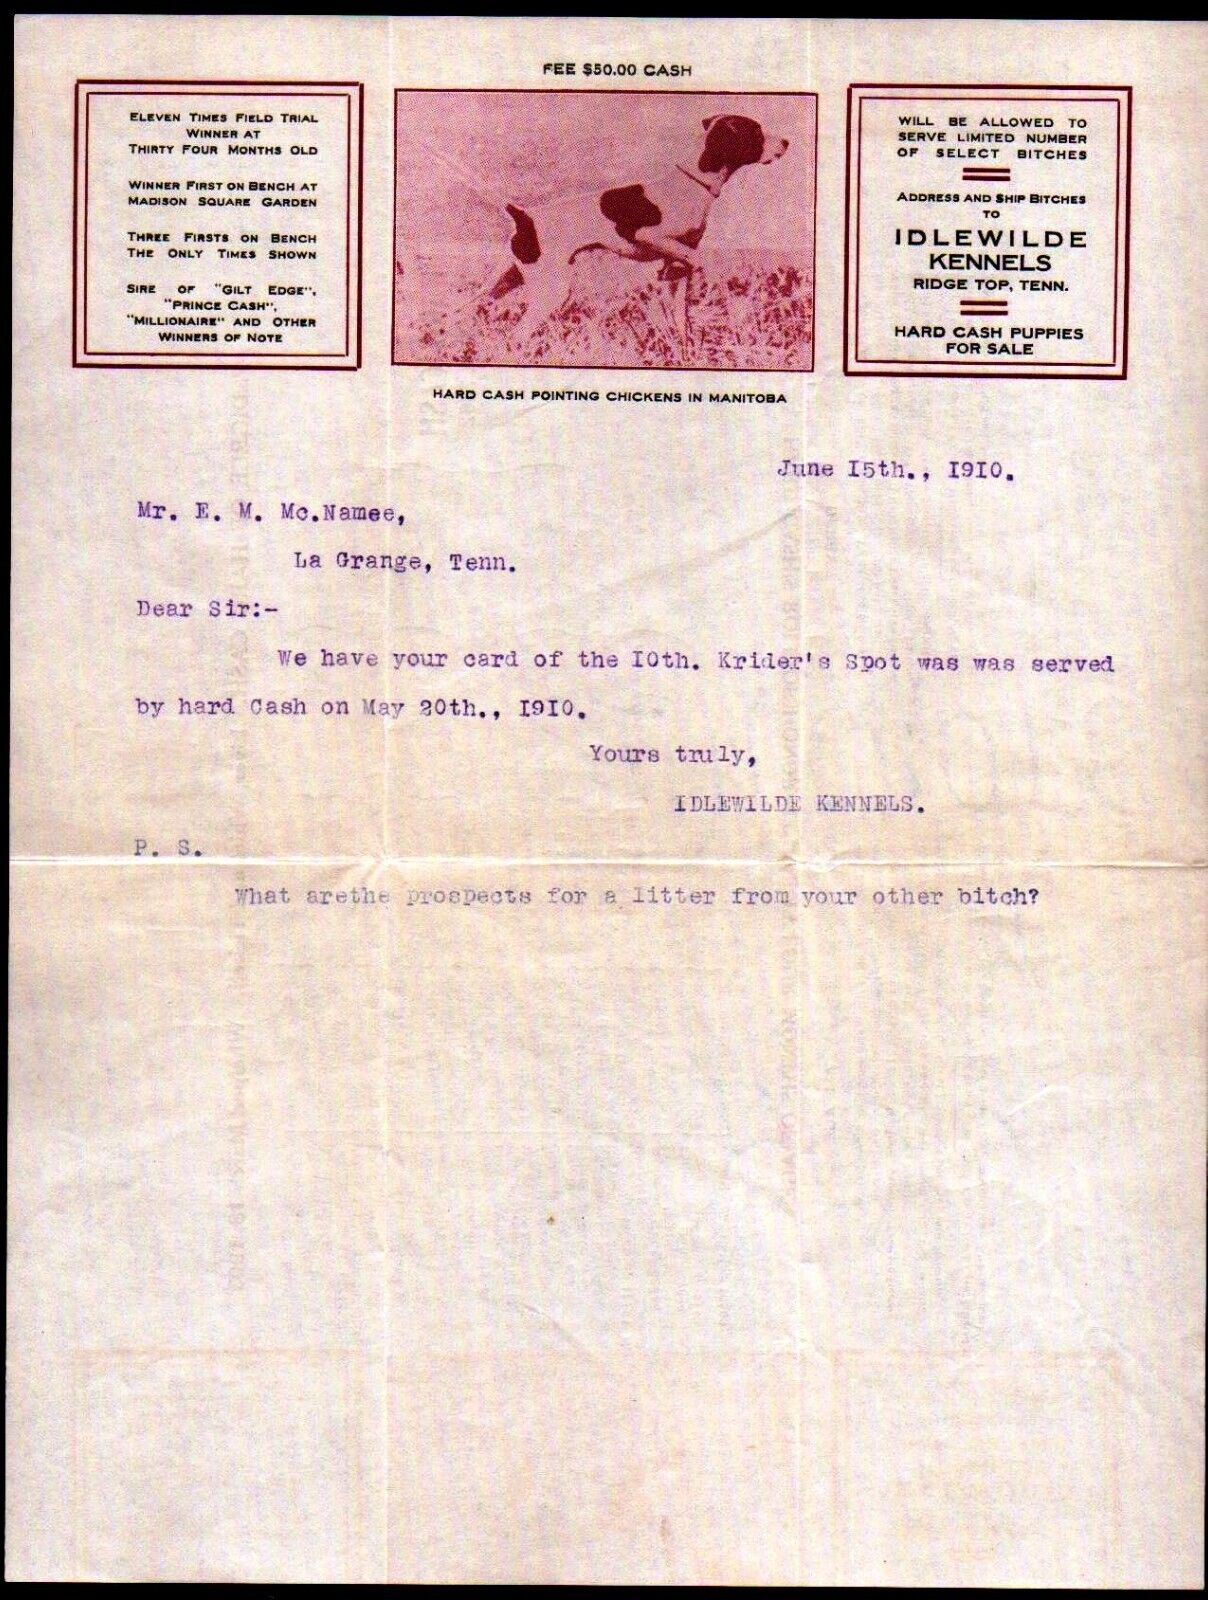 1910 Ridge Top Tn - Idlewilde DOG Kennels - Hand Cash Puppies - Letter Head Bill